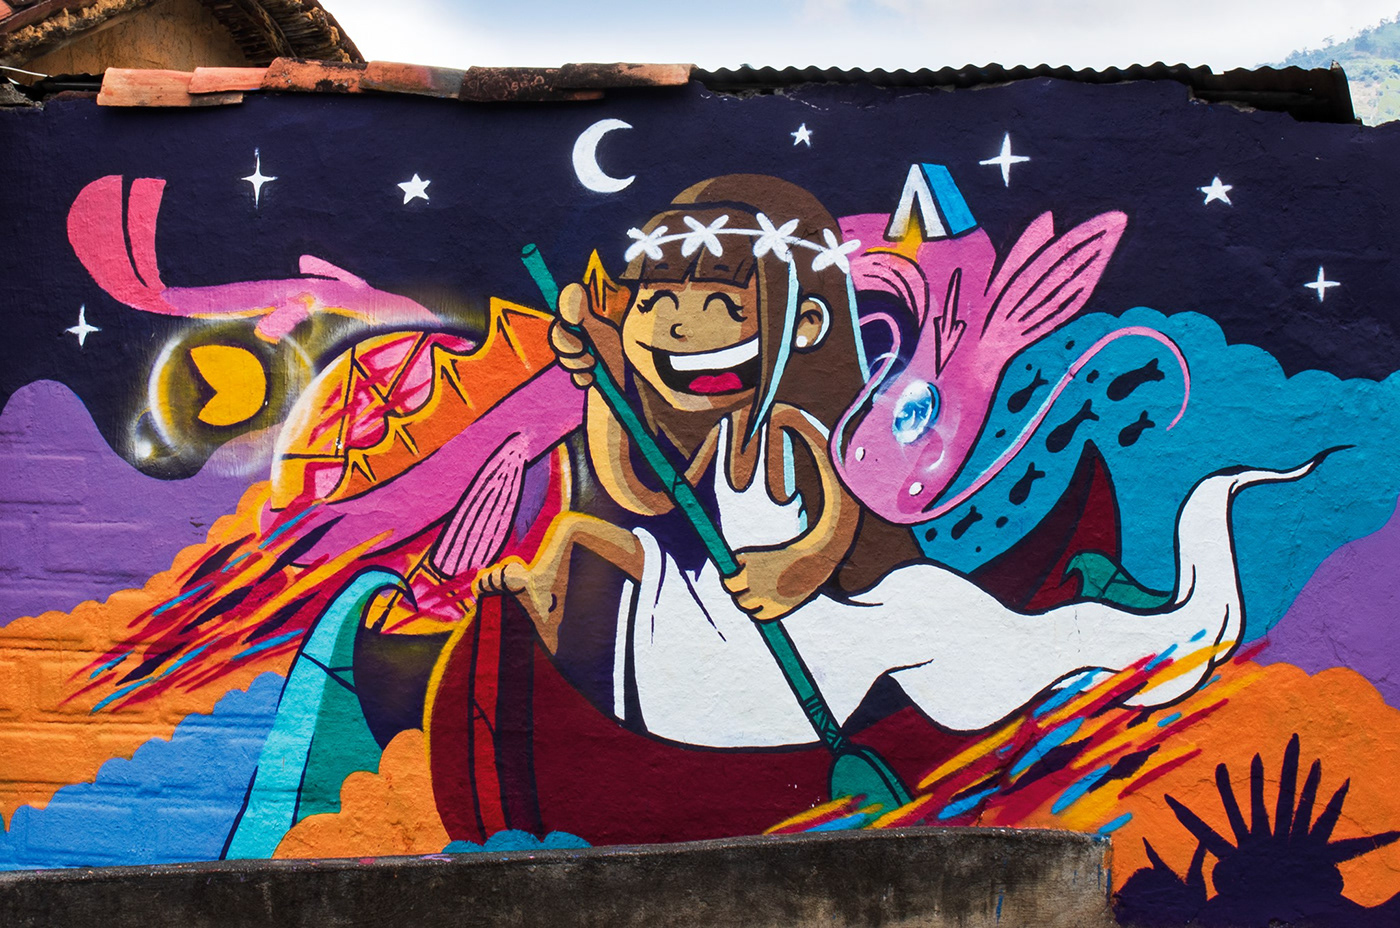 aerosol arteurbano Bucaramanga cans Character Graffiti ilustracion letters merwil streetart